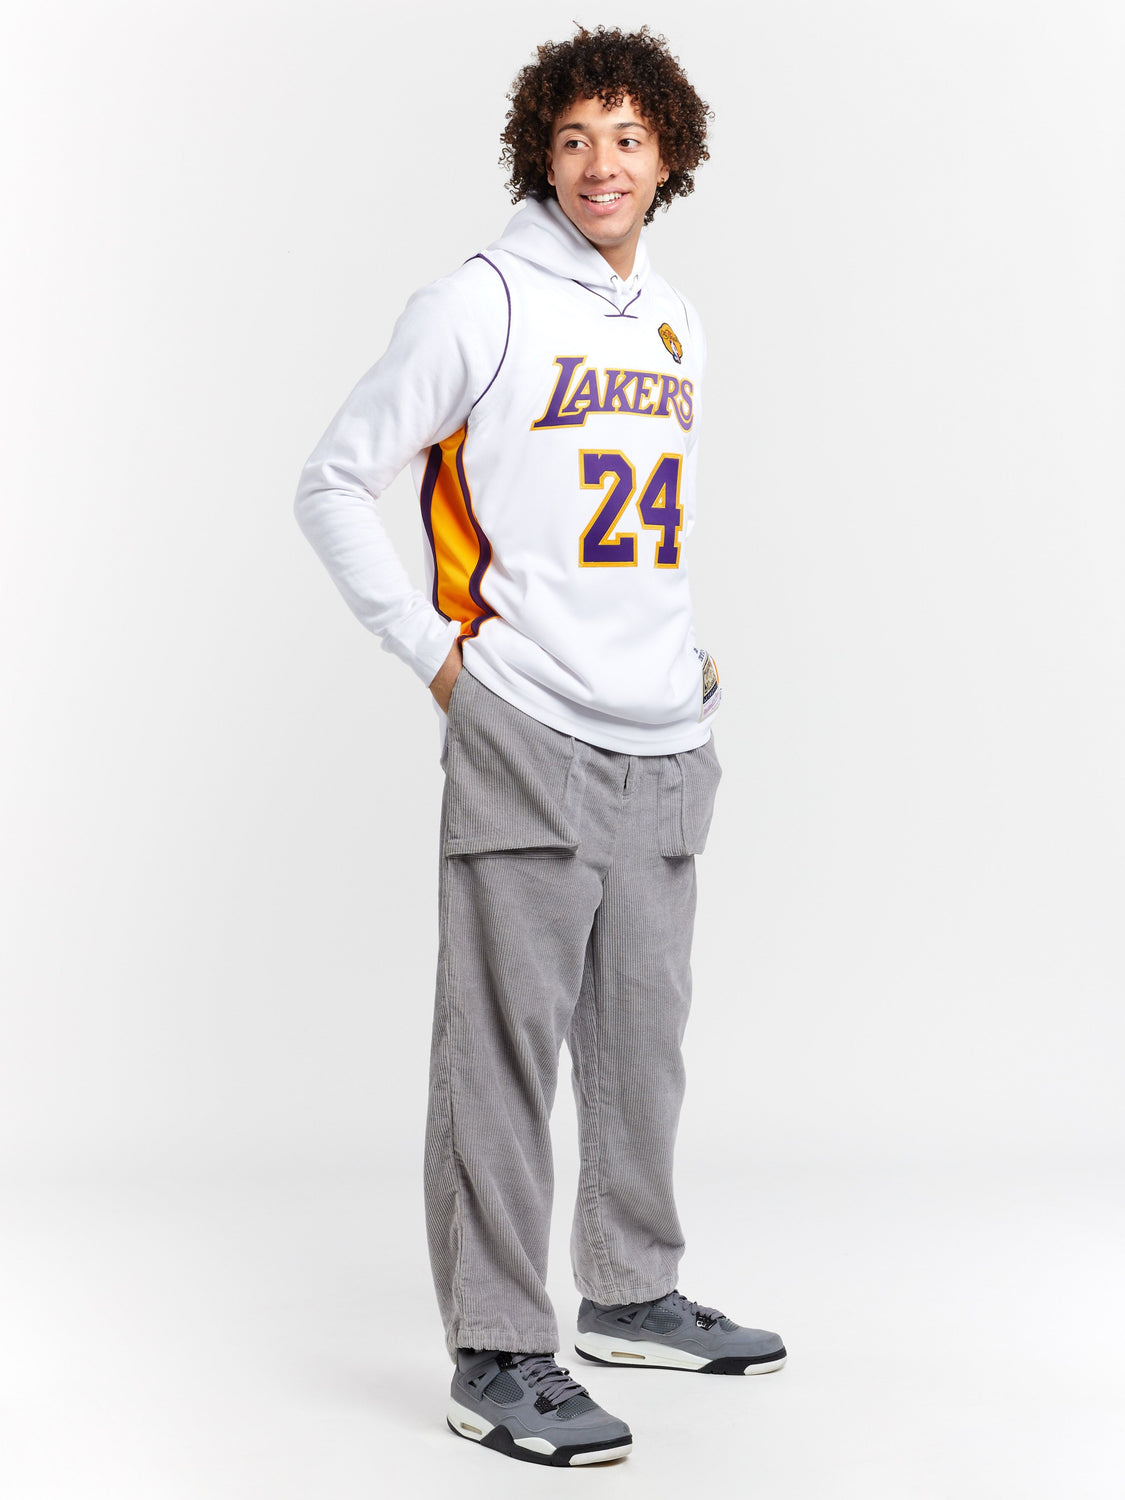 Kobe Bryant 09-10 White Lakers Authentic | Mitchell & Ness